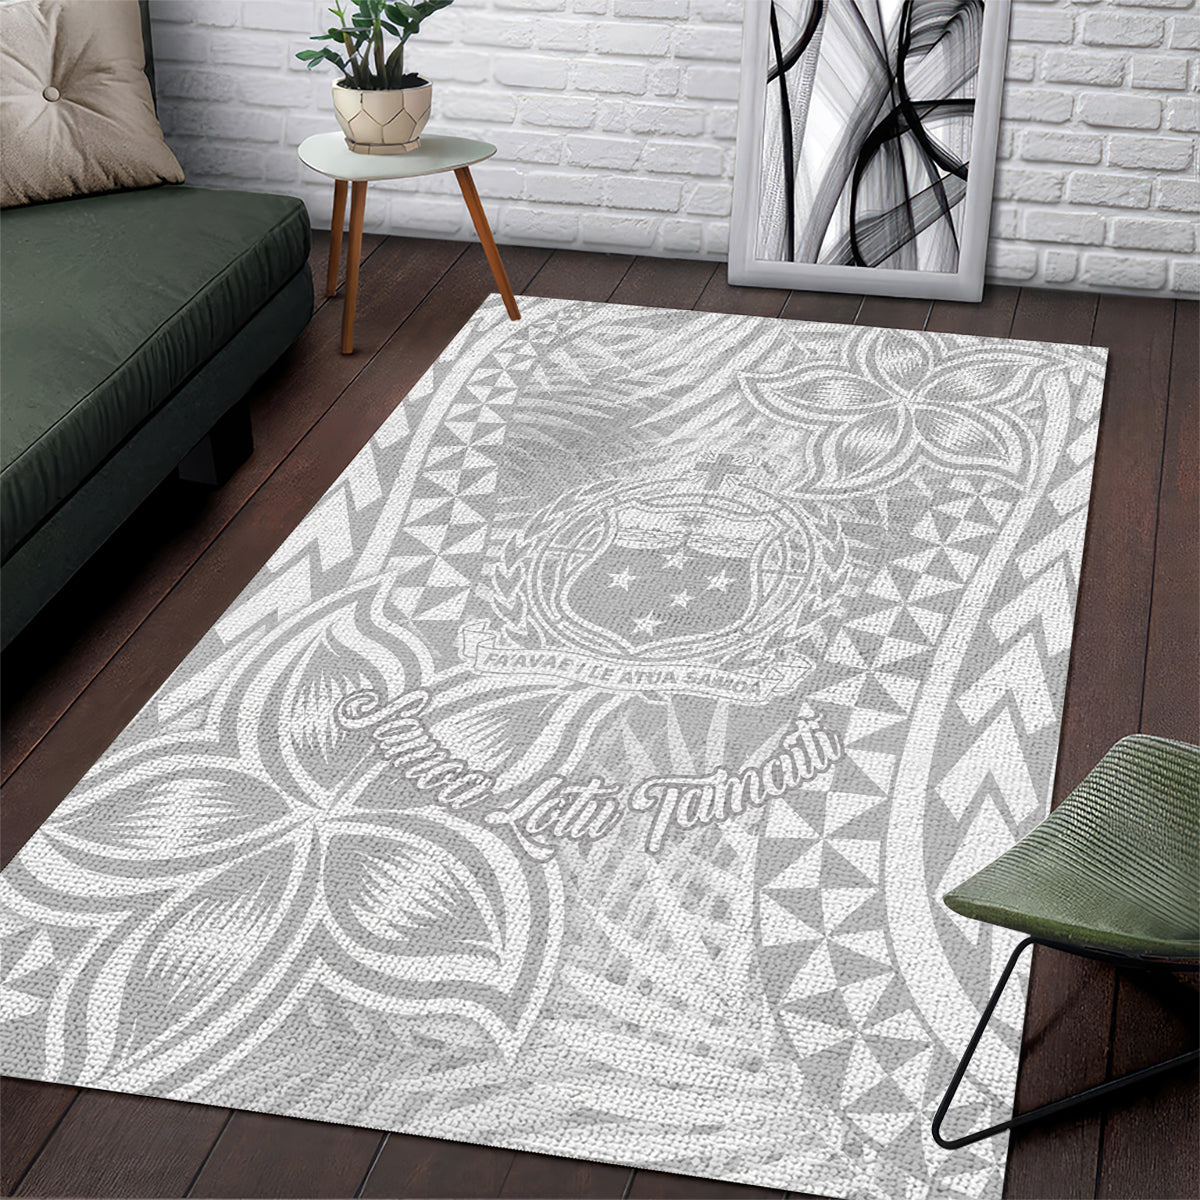 samoa-lotu-tamait-area-rug-tropical-plant-white-sunday-with-polynesia-pattern